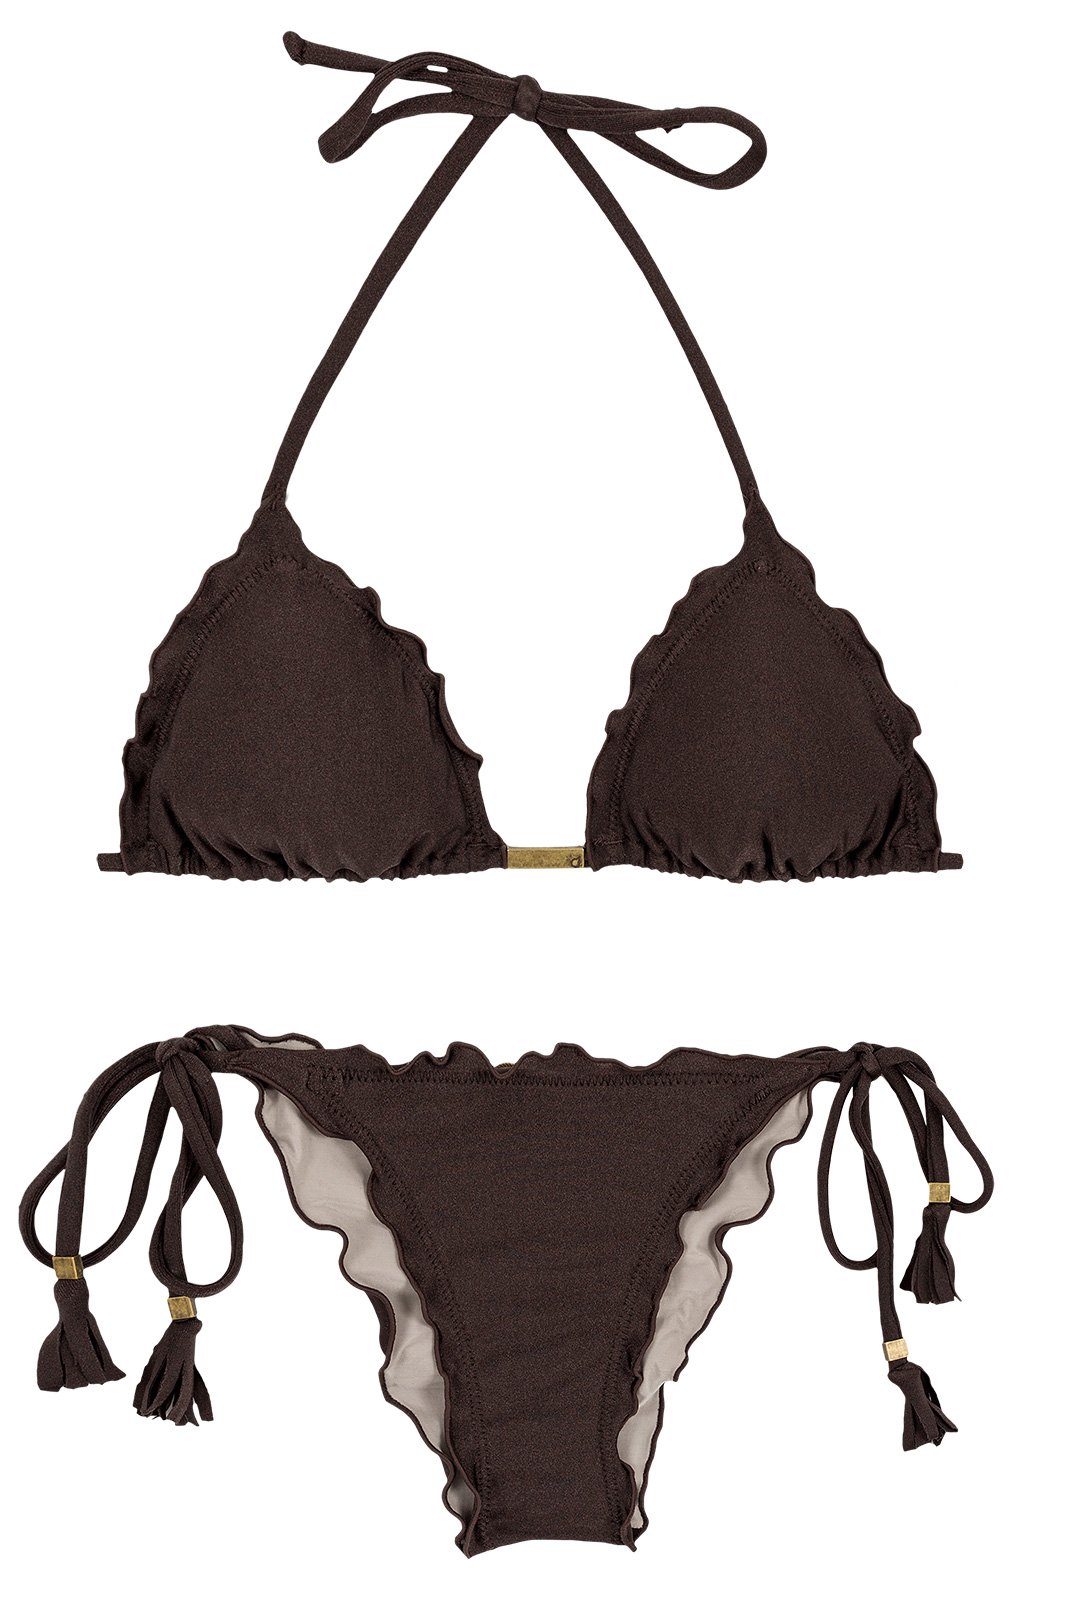 kubus Ventileren stoom Black Scrunch Bikini With Tassels - Meteorite Frufru - Rio de Sol